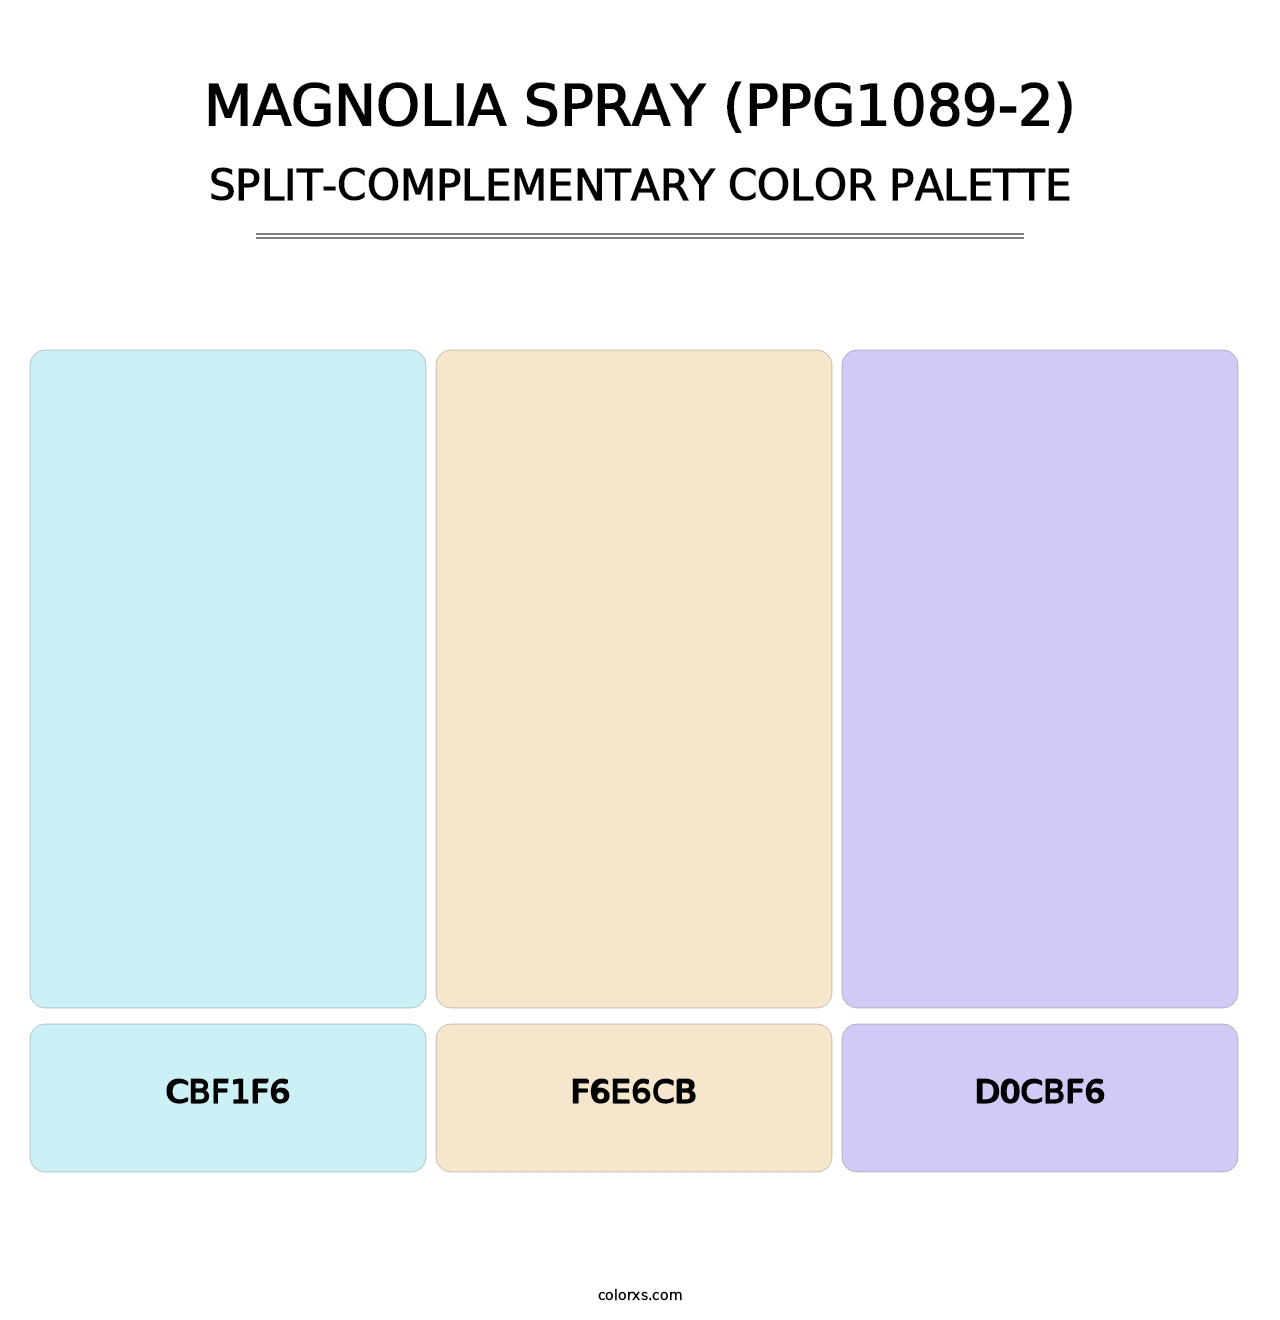 Magnolia Spray (PPG1089-2) - Split-Complementary Color Palette